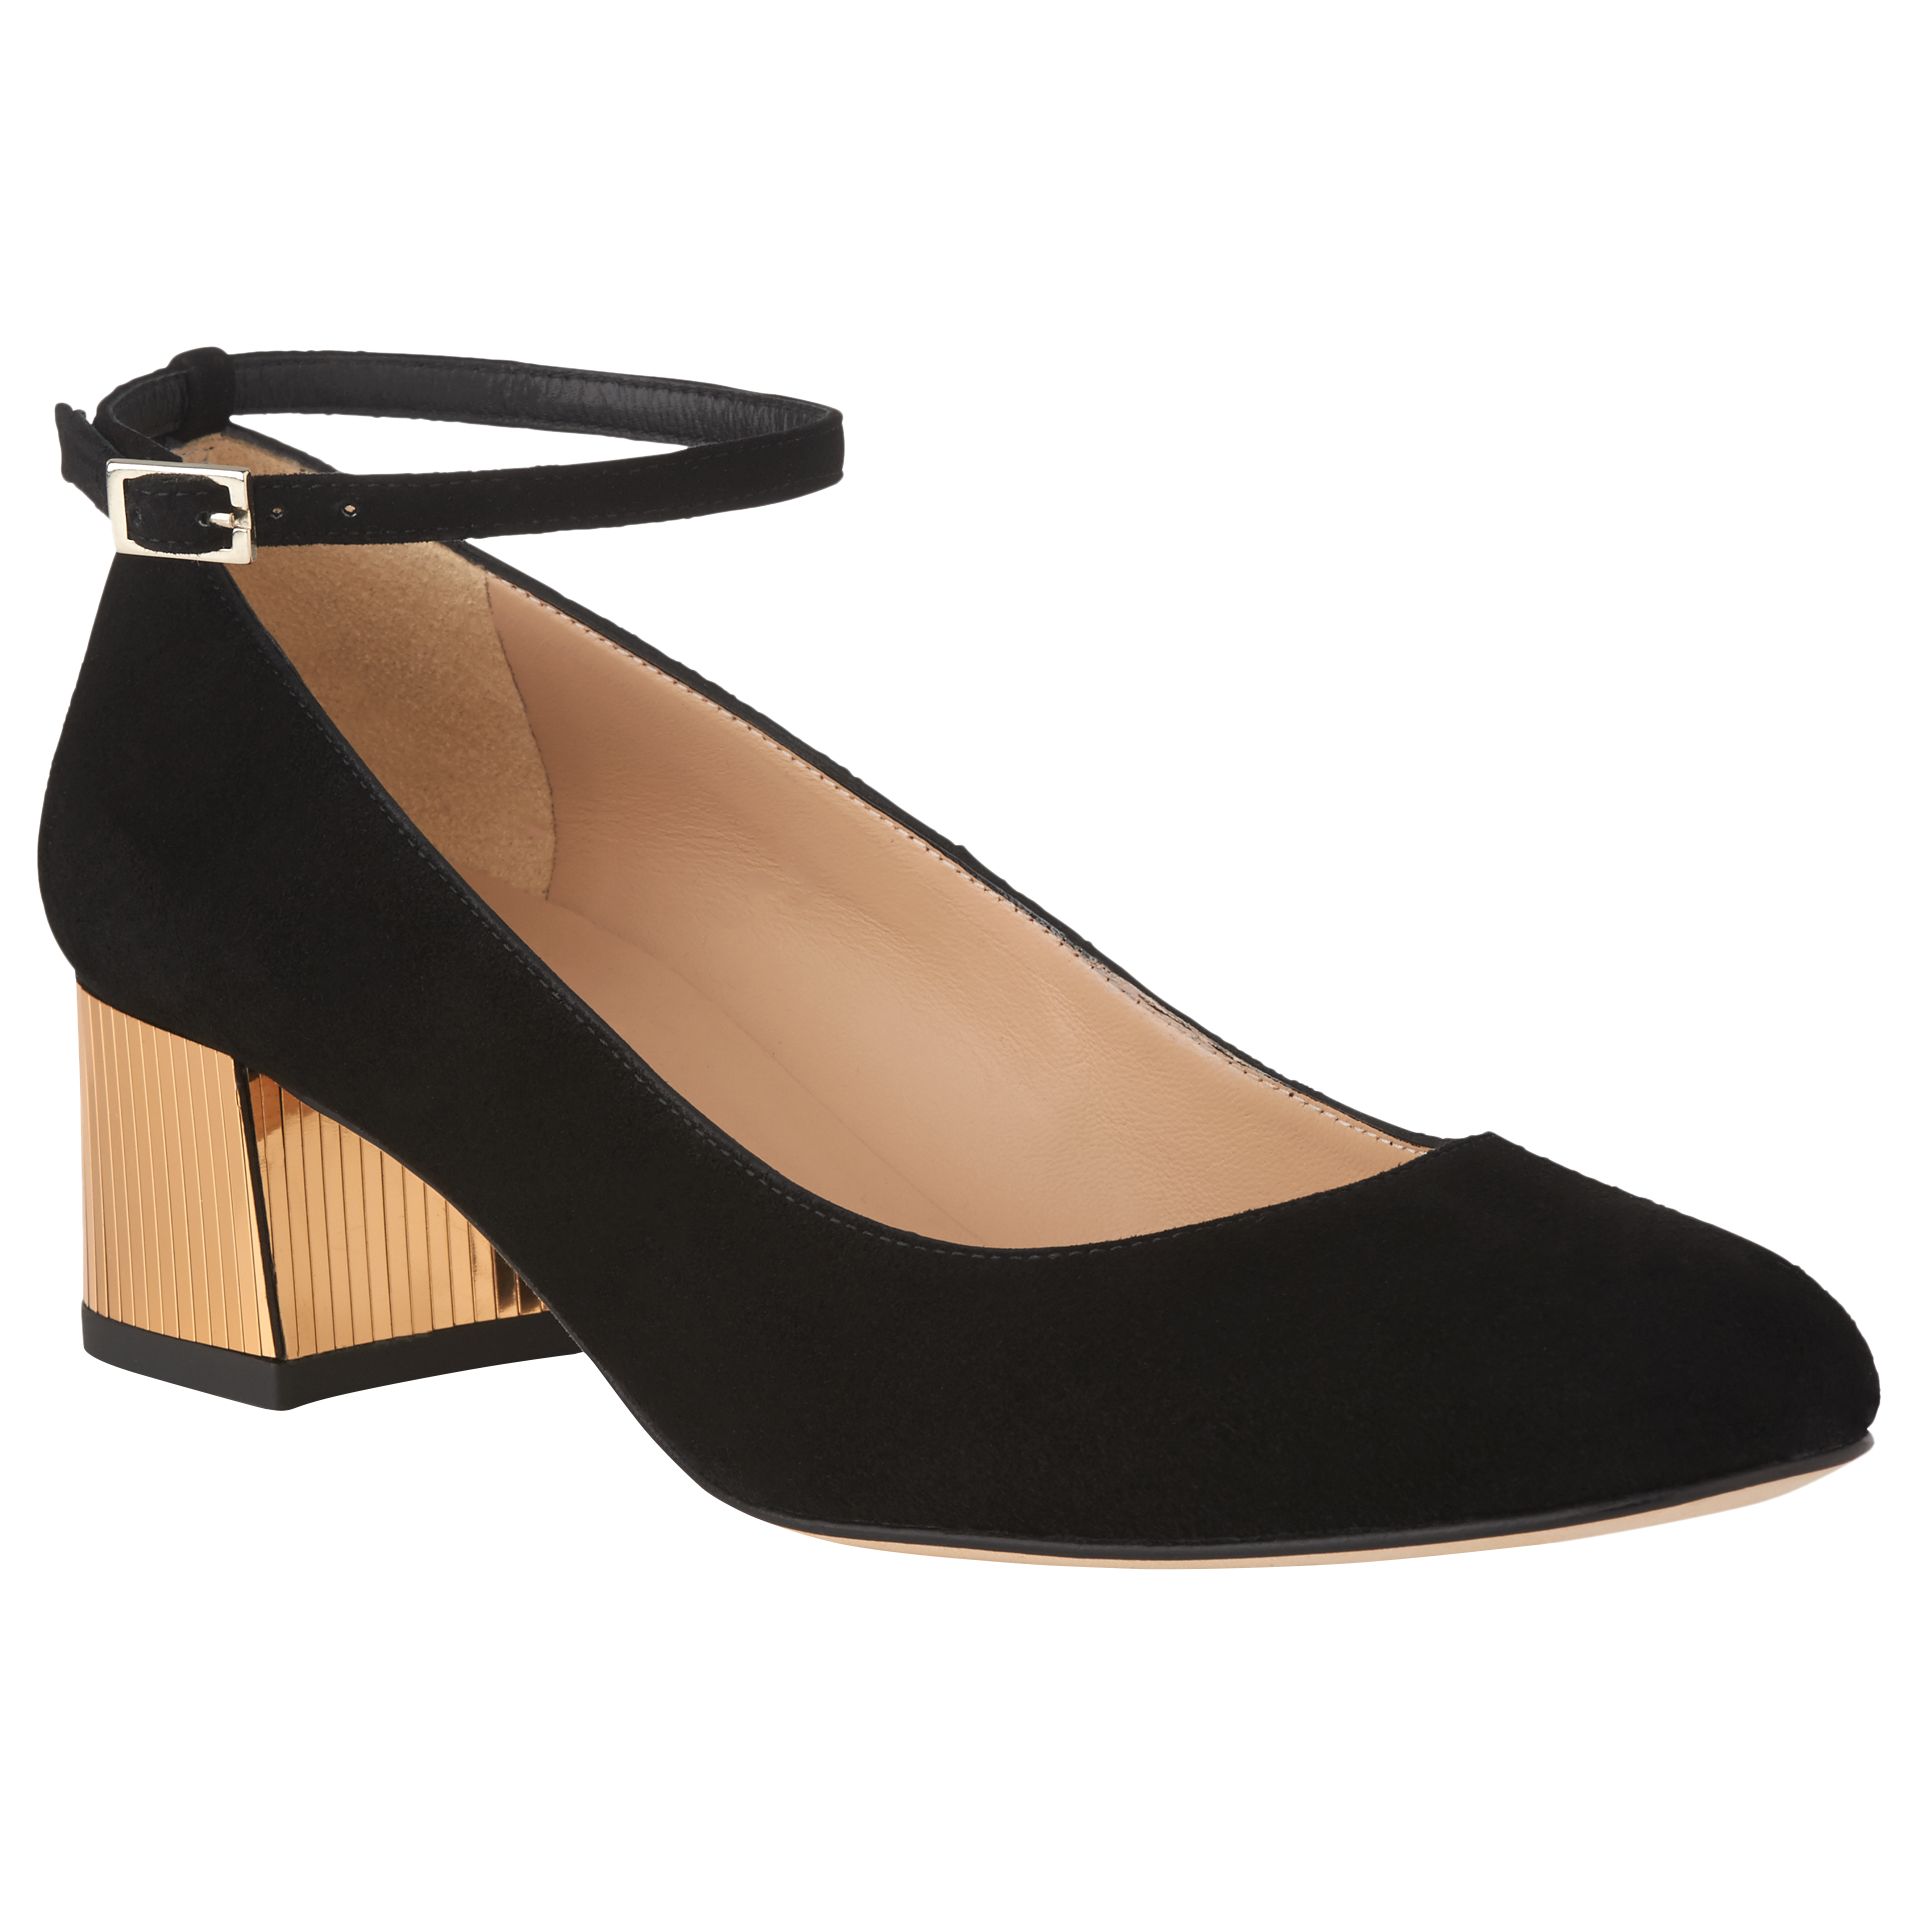 black and gold block heels